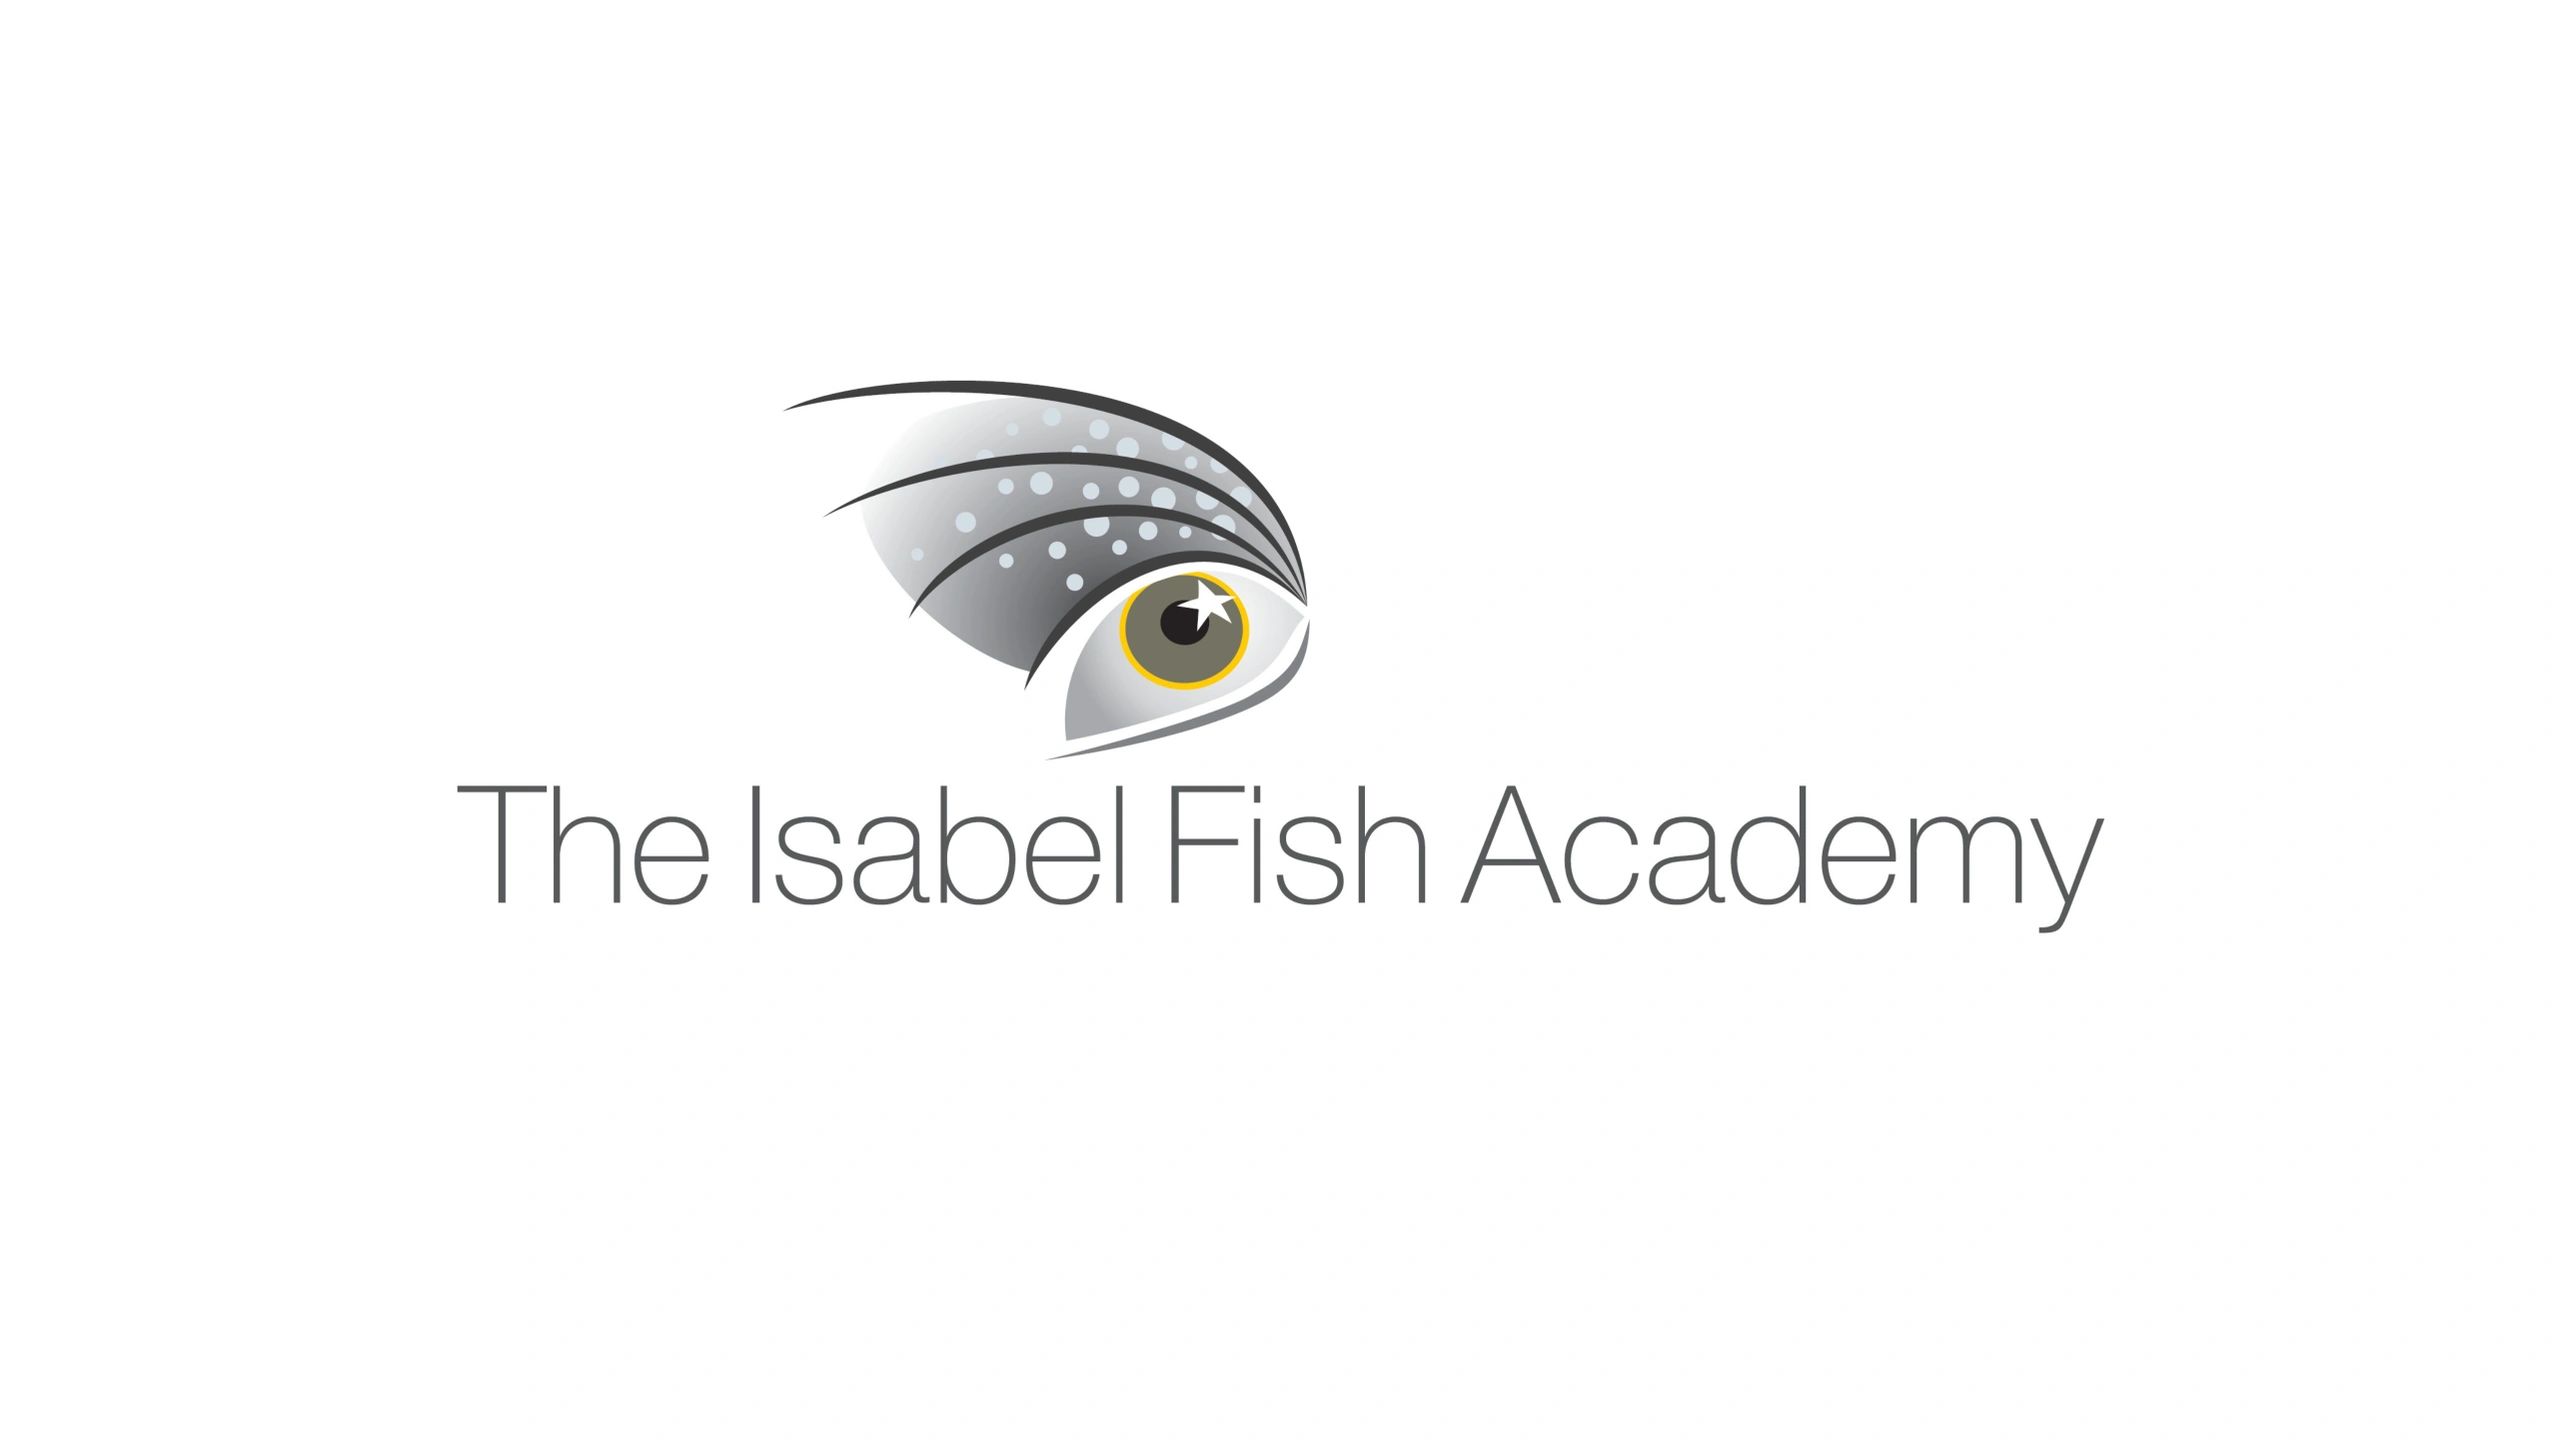 (c) Isabelfish.co.nz